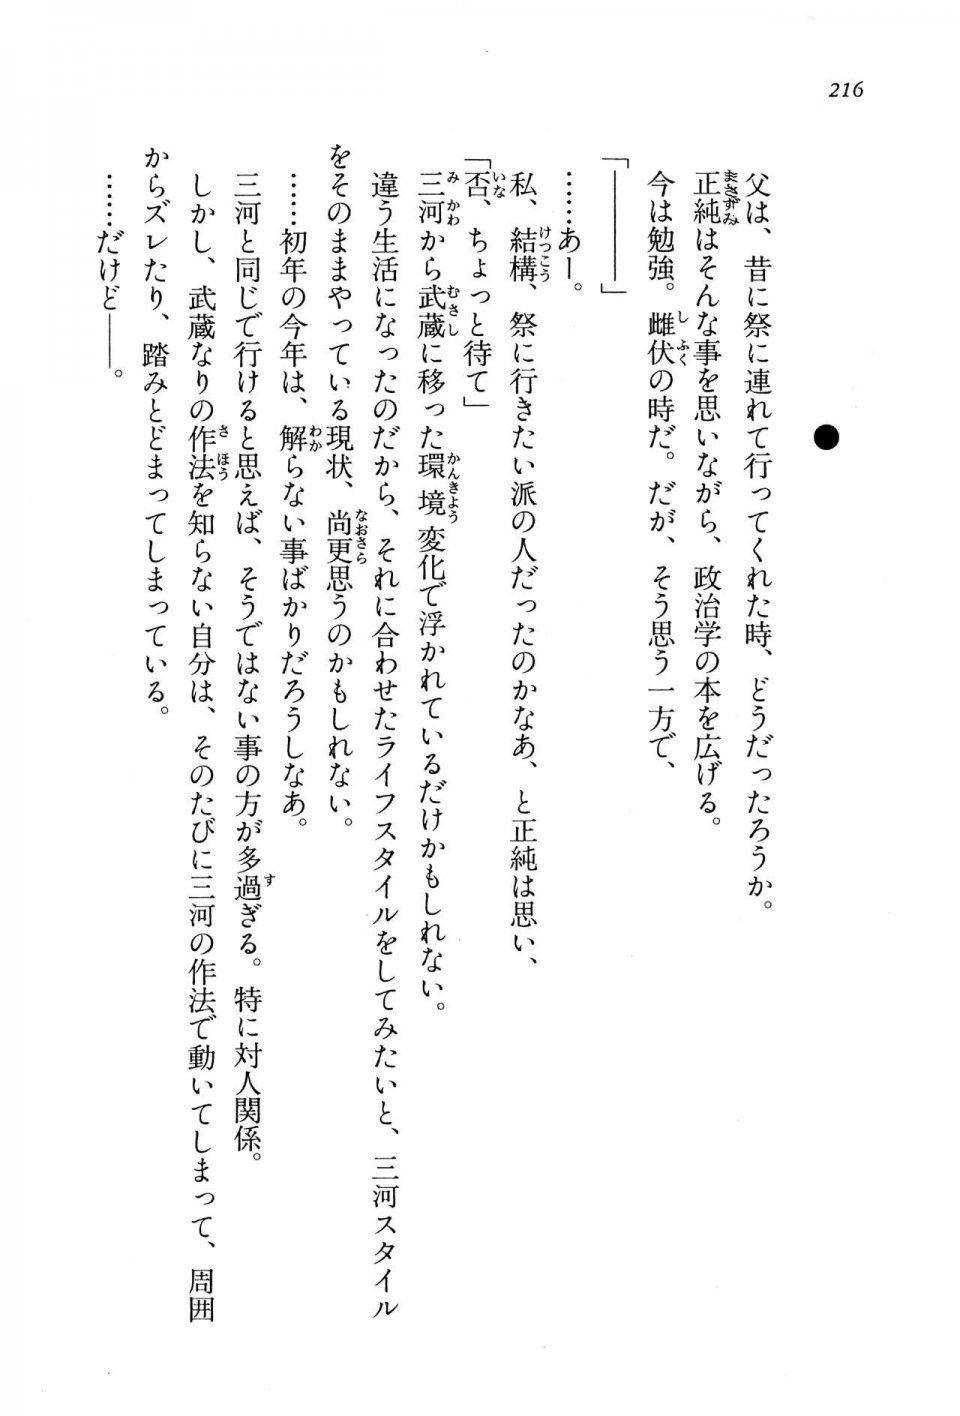 Kyoukai Senjou no Horizon BD Special Mininovel Vol 8(4B) - Photo #220